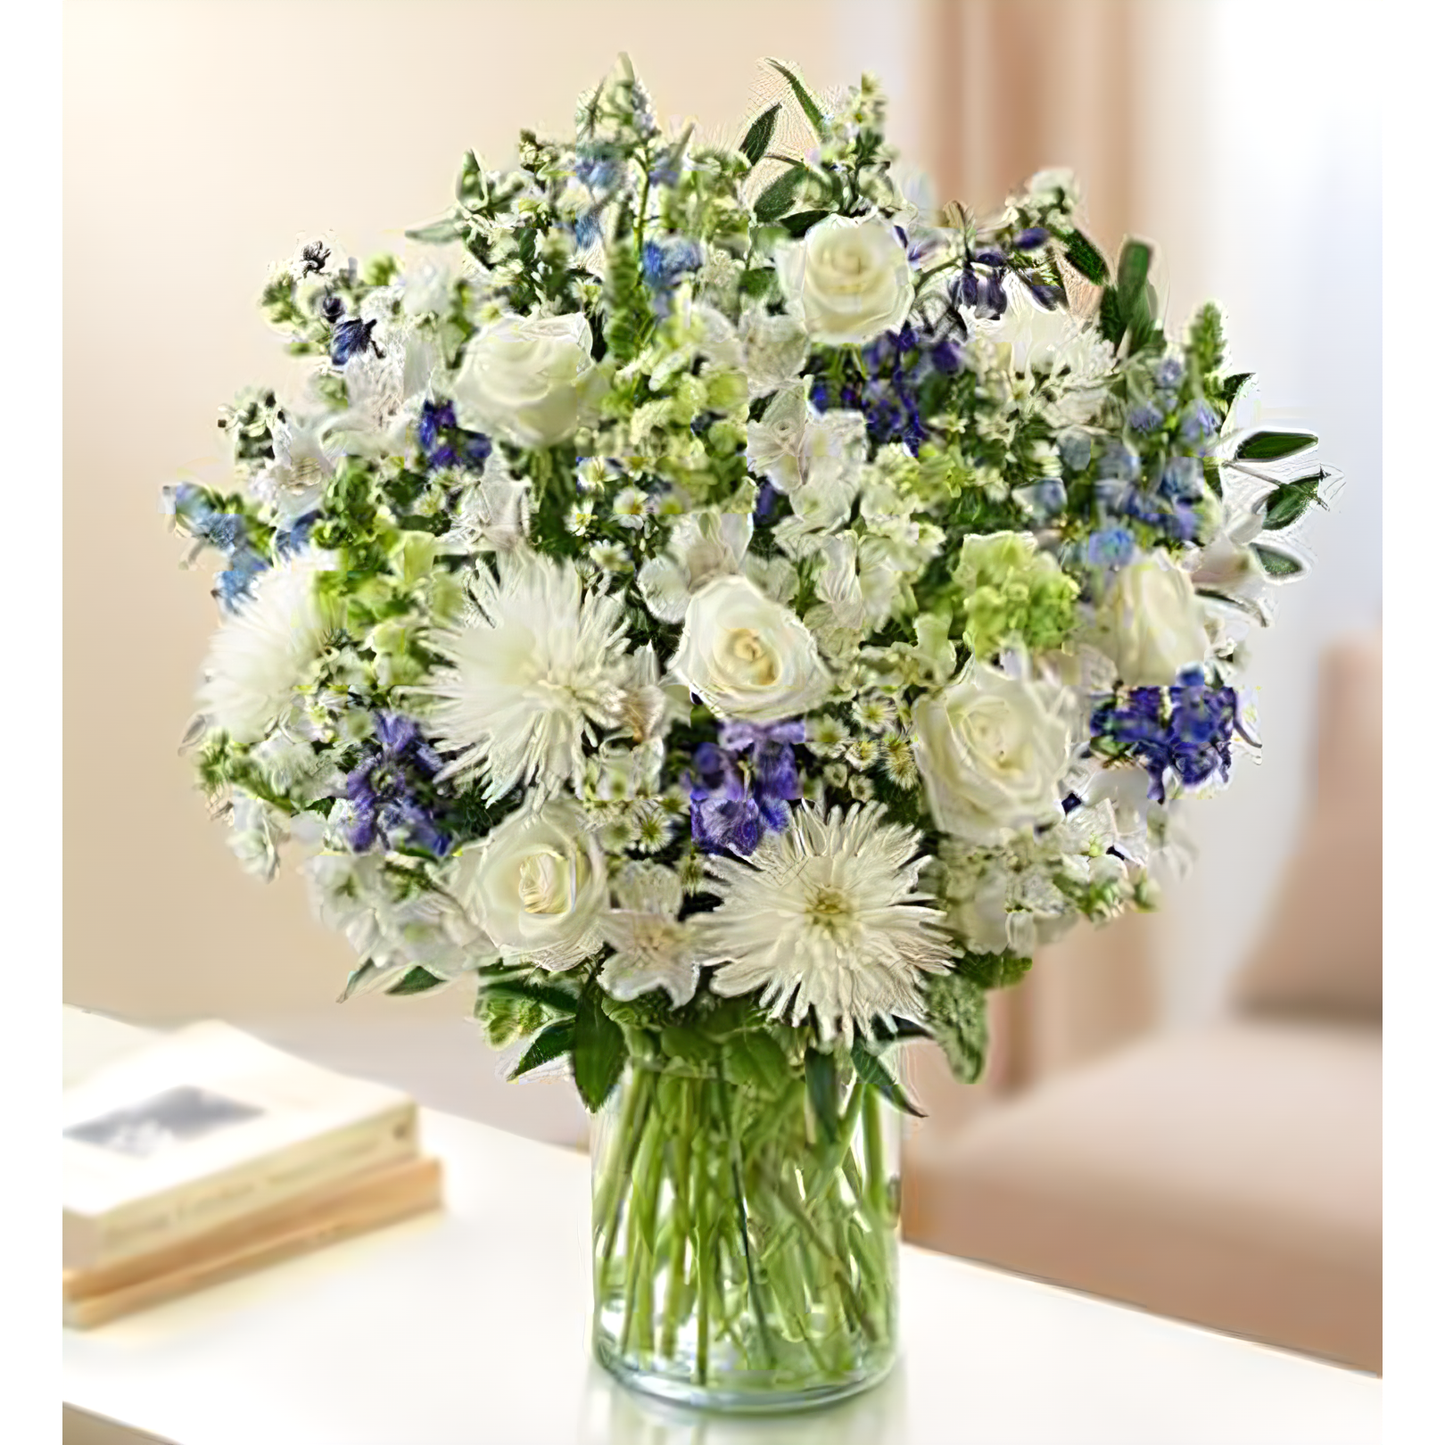 Sincerest Sorrow - Blue and White - Funeral > Vase Arrangements